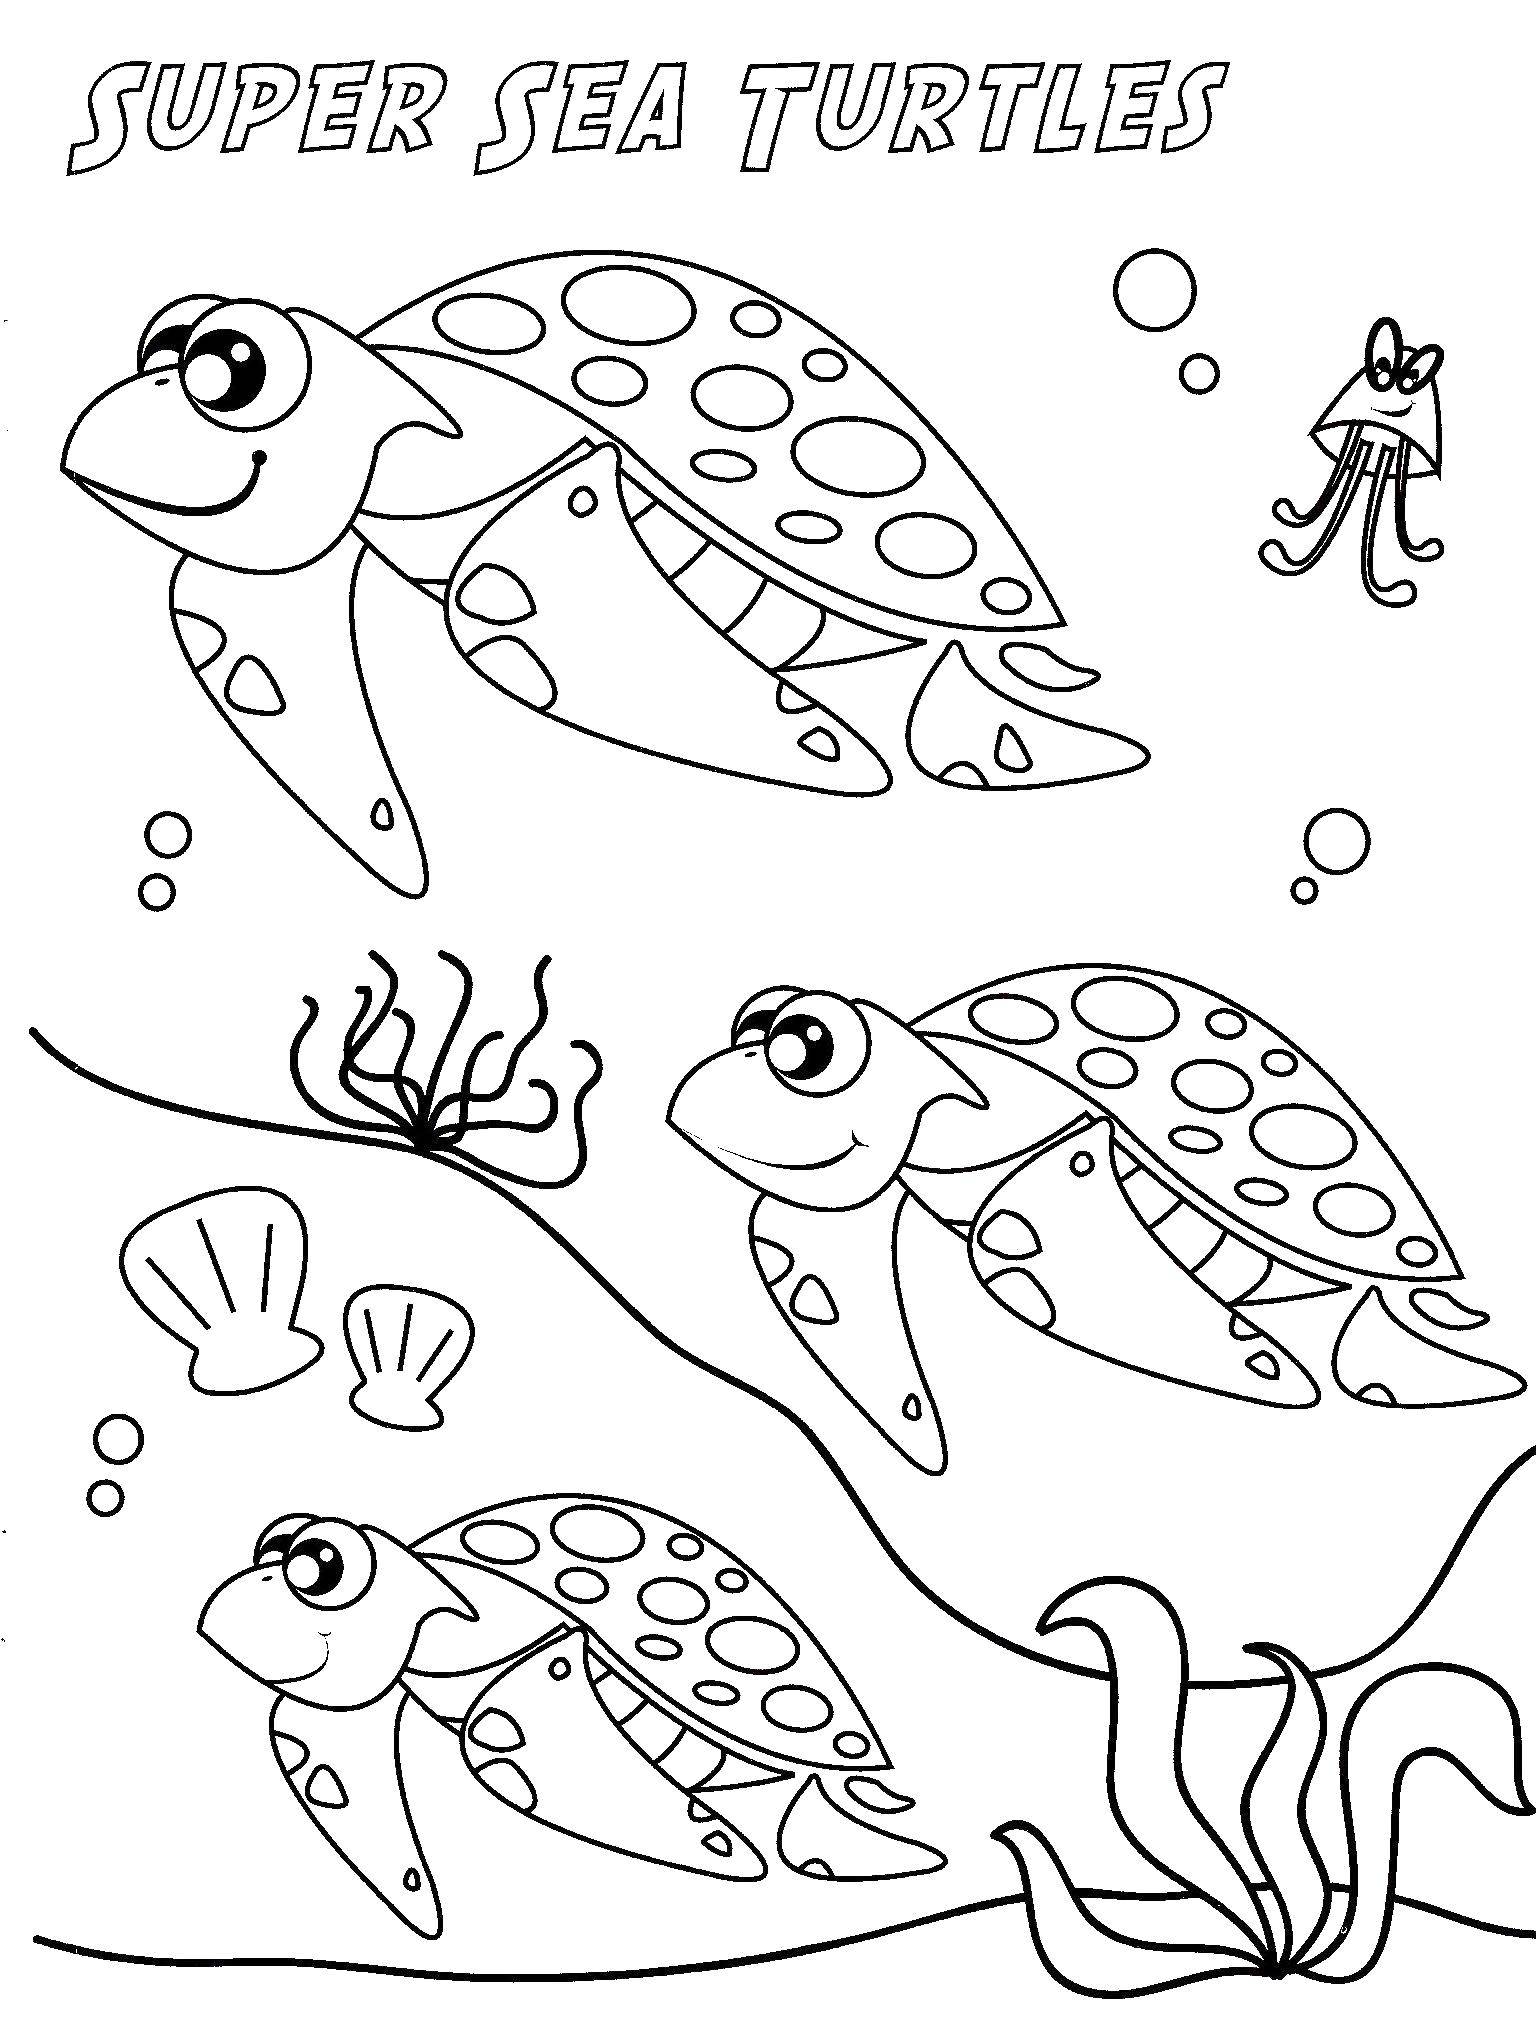 Название: Раскраска Морские черепахи. Категория: Морские животные. Теги: Рептилия, черепаха.